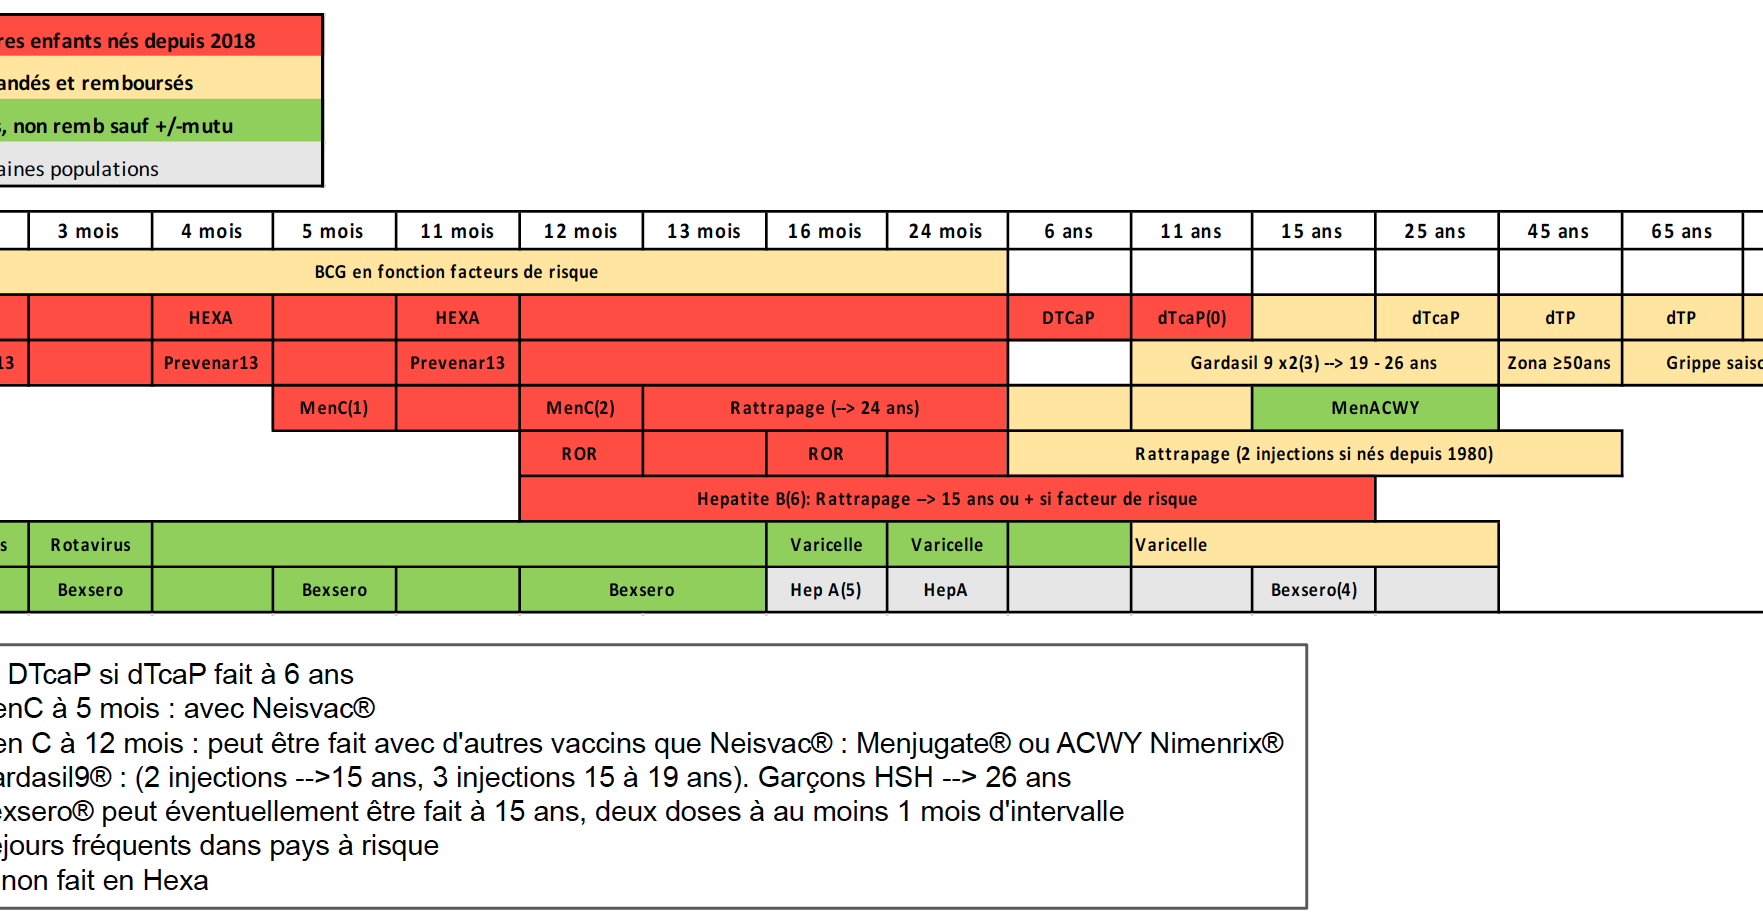 Calendrier Vaccinal InfoVac Novembre 2020 Infovac France